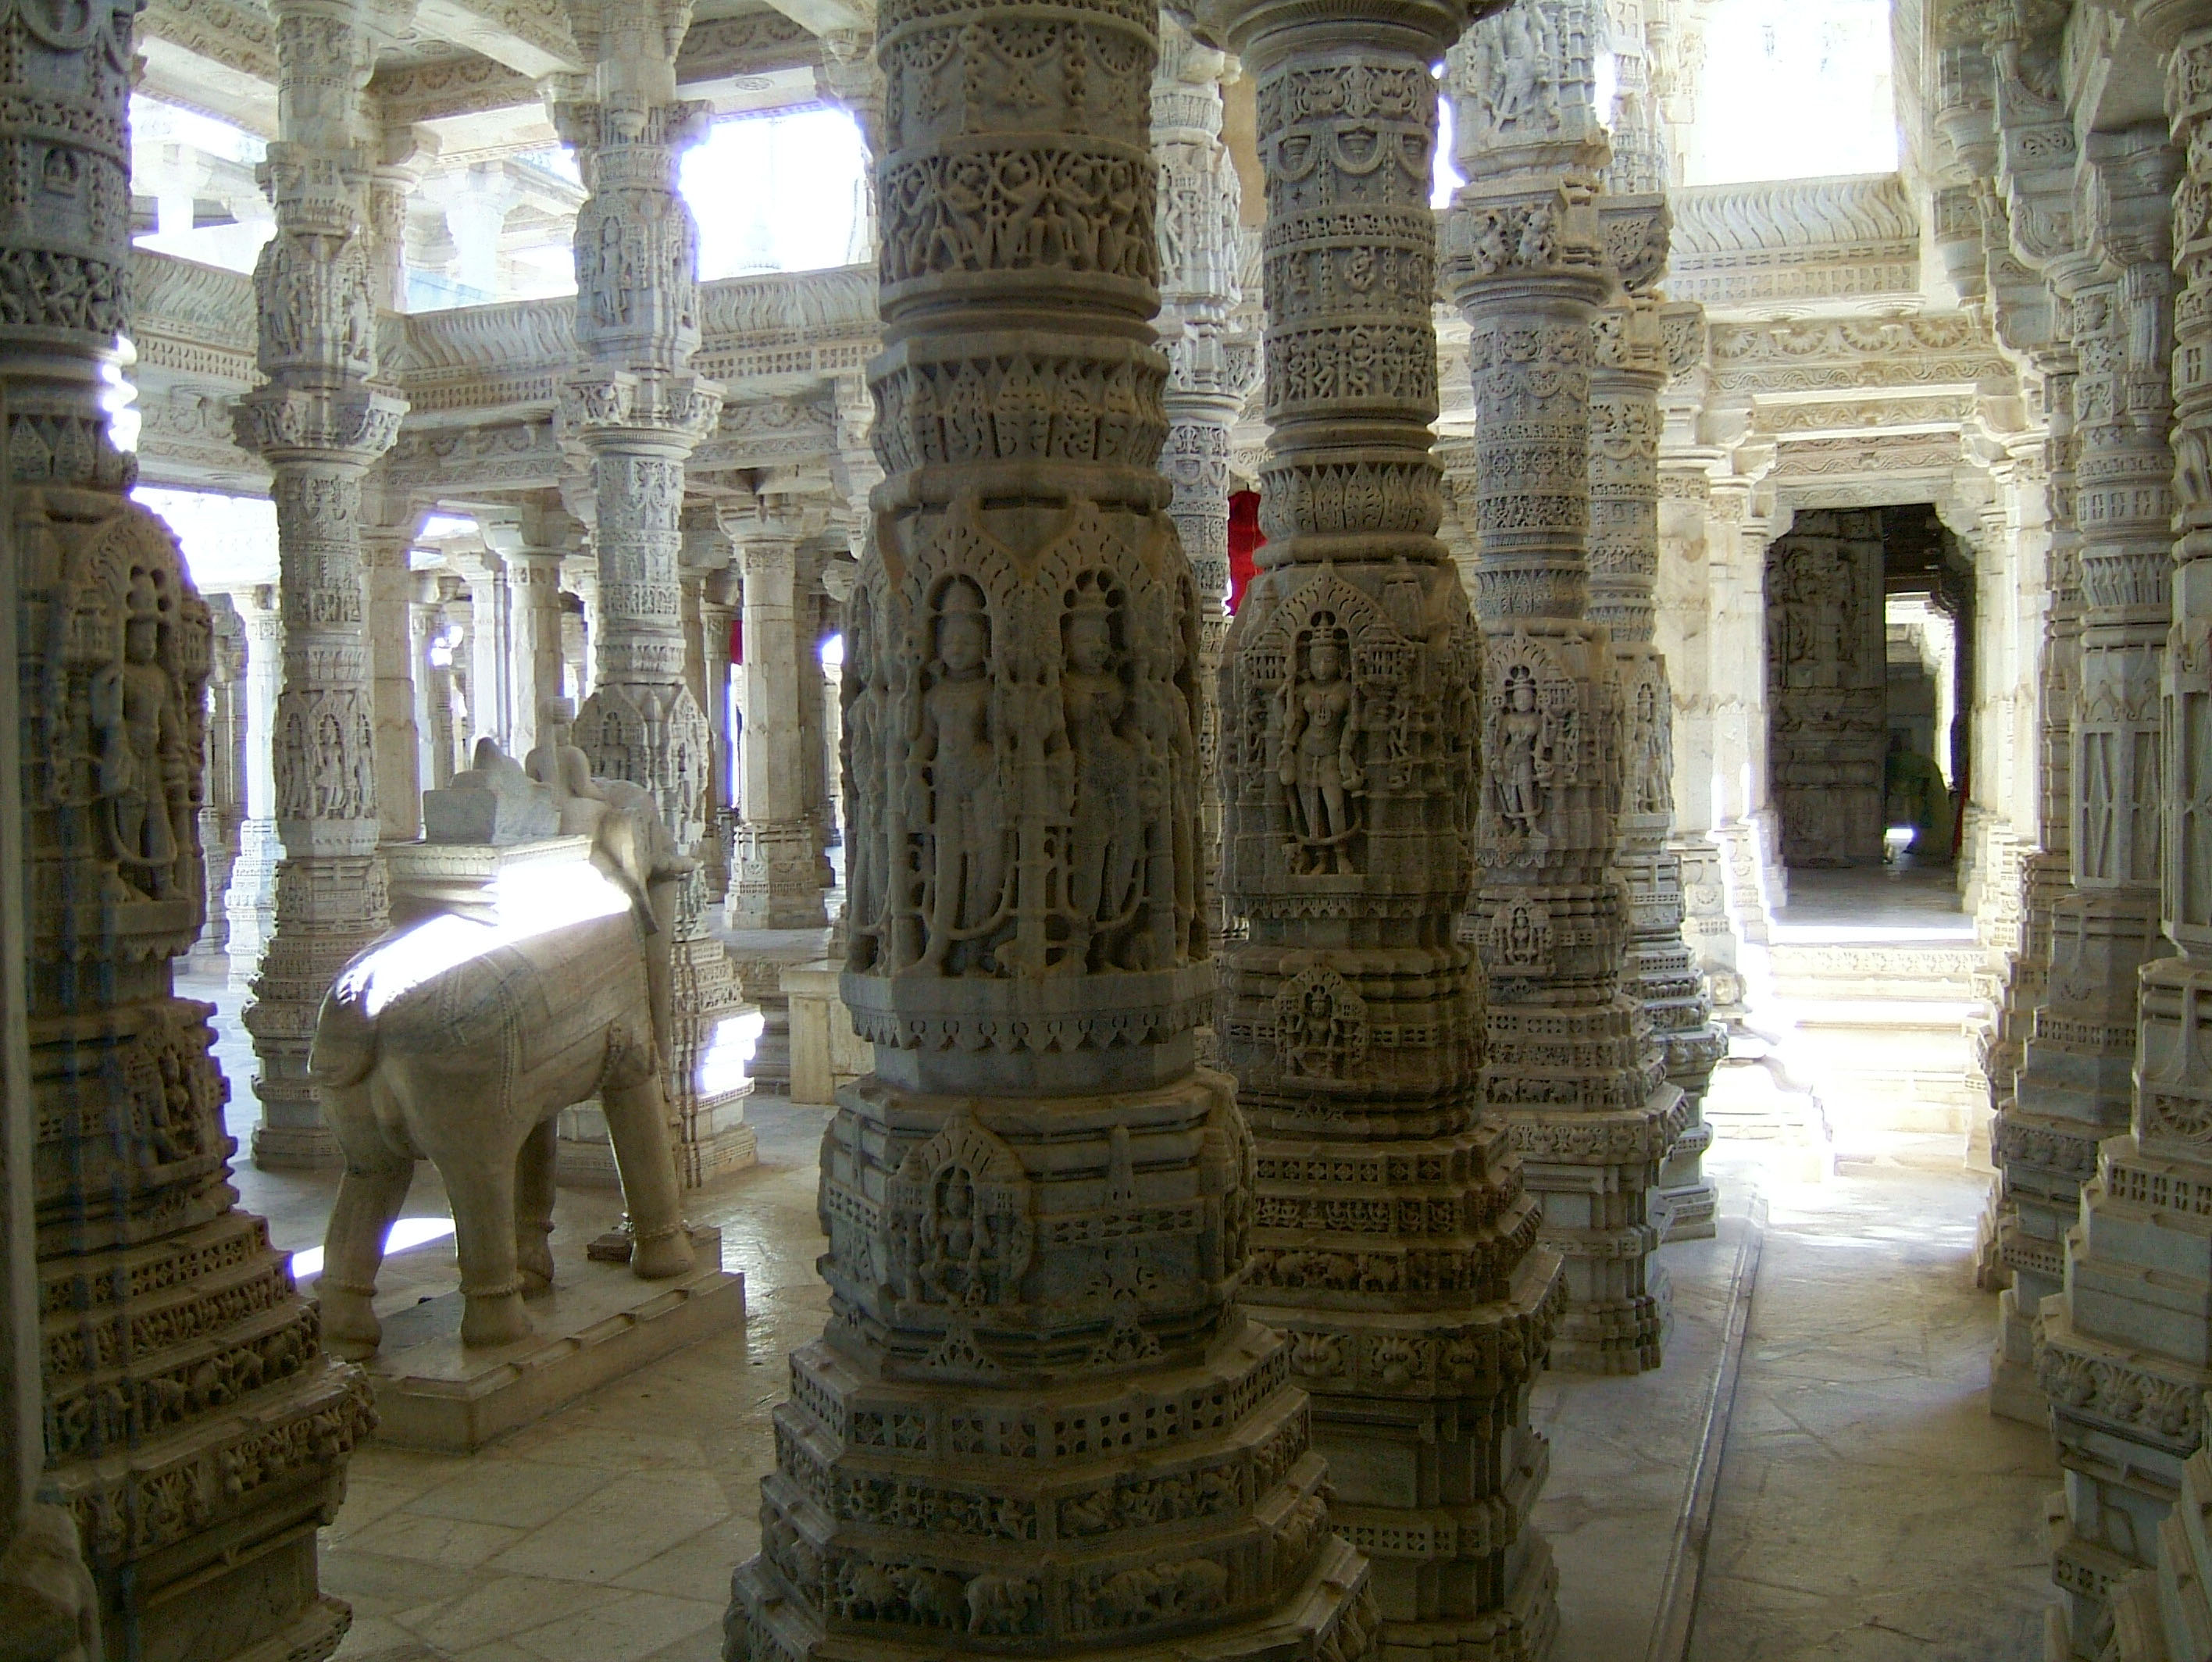 Ranakpur Jain Marble Temple pillars Frescoes India Apr 2004 08